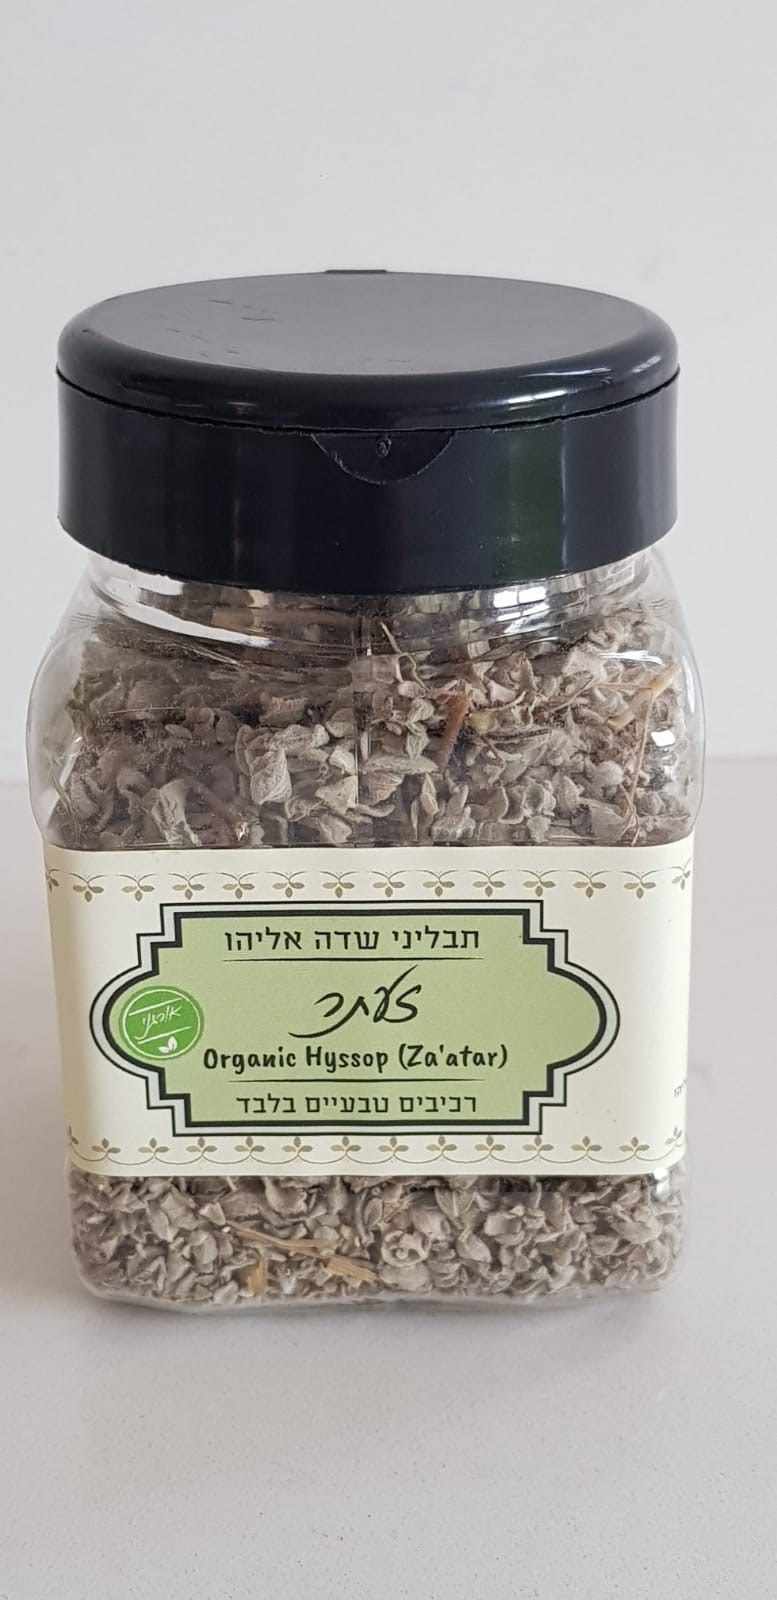 Organic Hyssop - 25g - Organic Spice